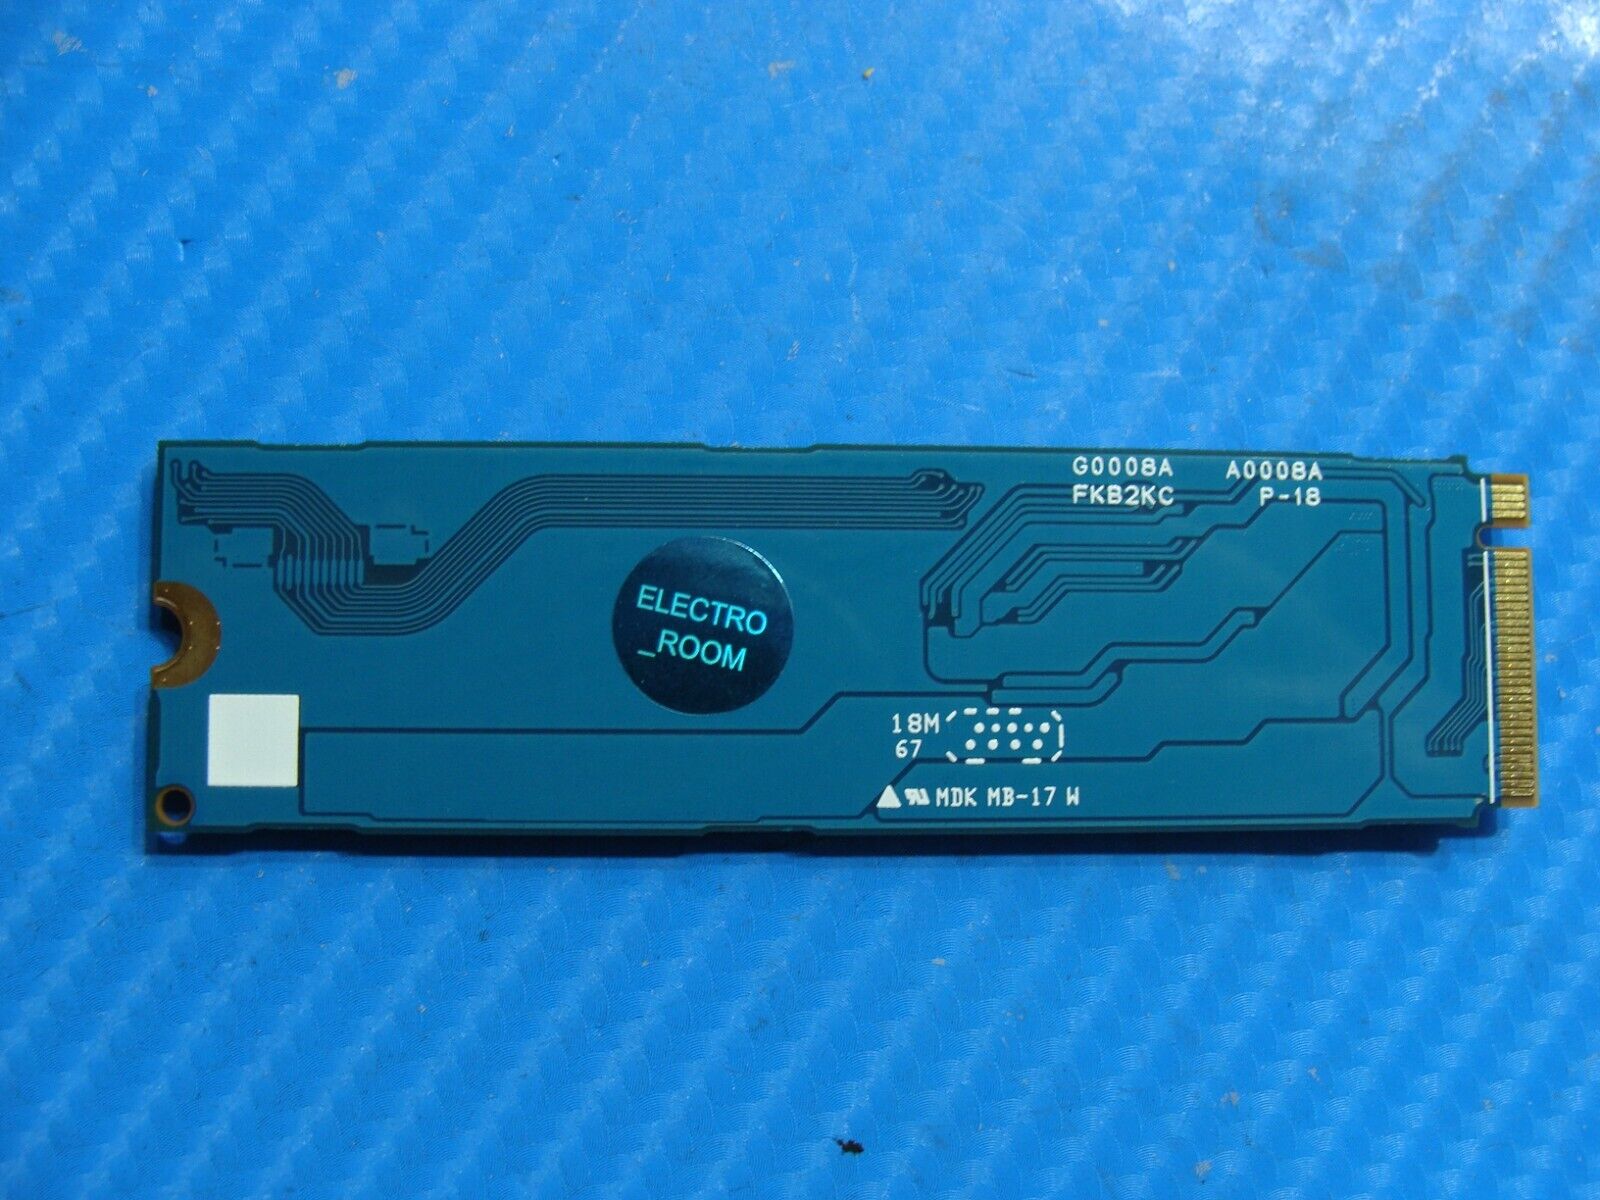 HP 840 G7 Kioxia 512GB NVMe M.2 SSD Solid State Drive KXG60ZNV512G L85360-002